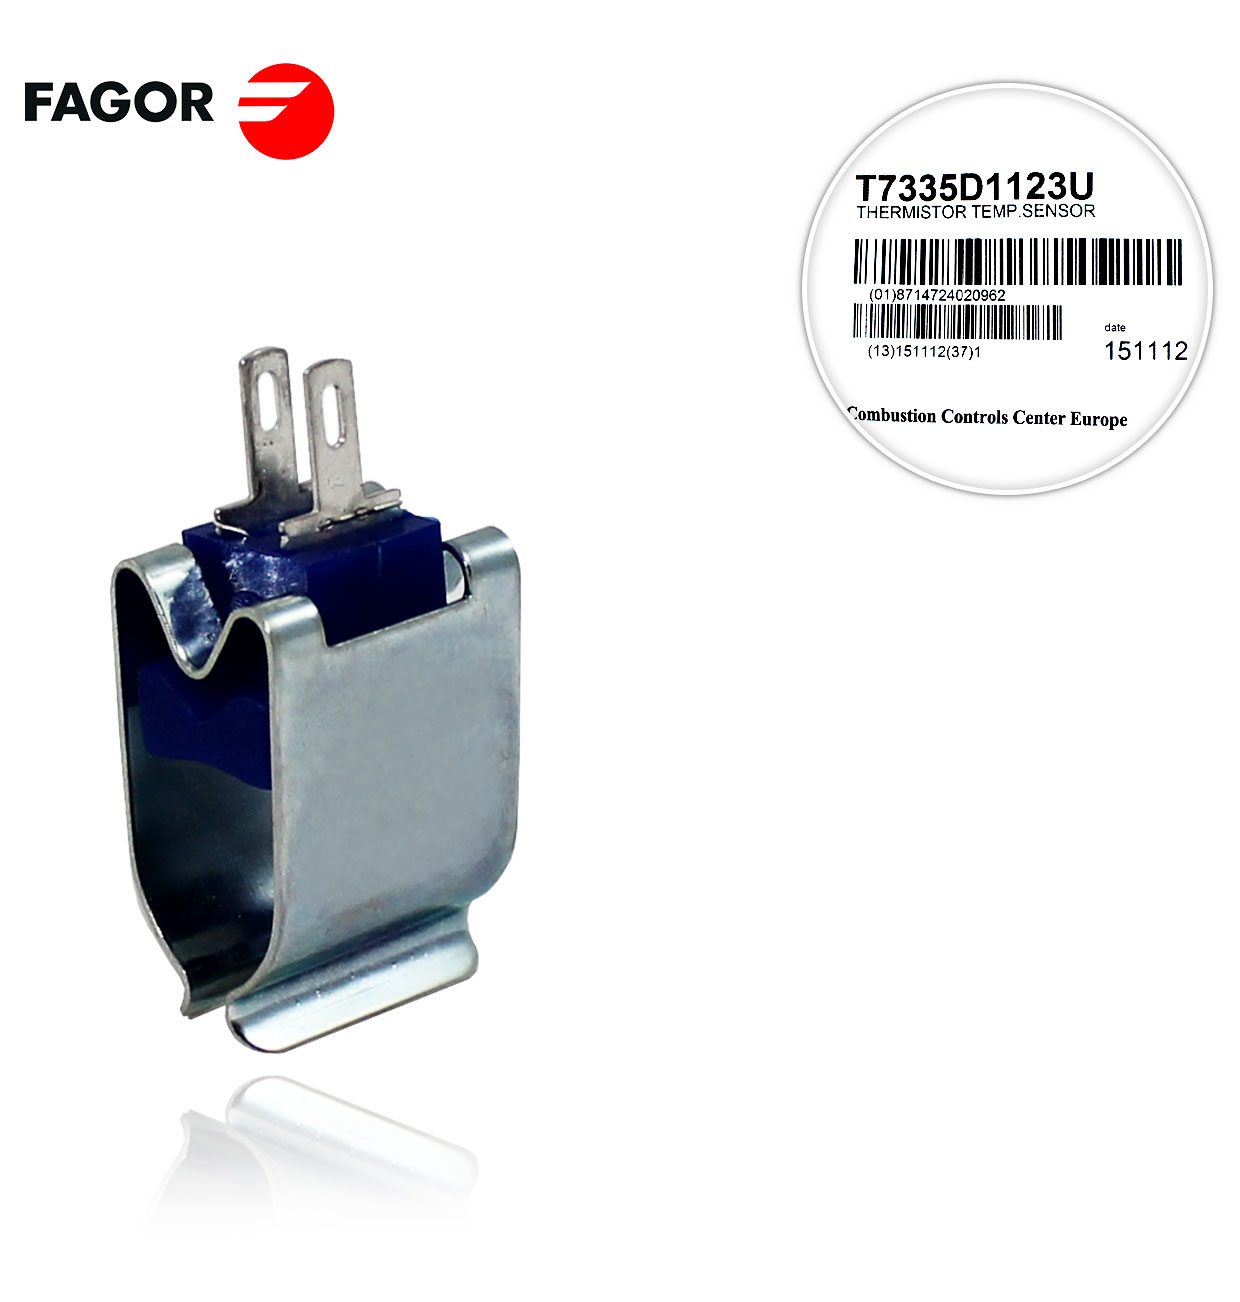 TERMISTANCIA TUBO 18  FAGOR  MU1011100  (T7335D1123U) || COMPATIBLE: 74,73056 || HONEYWELL